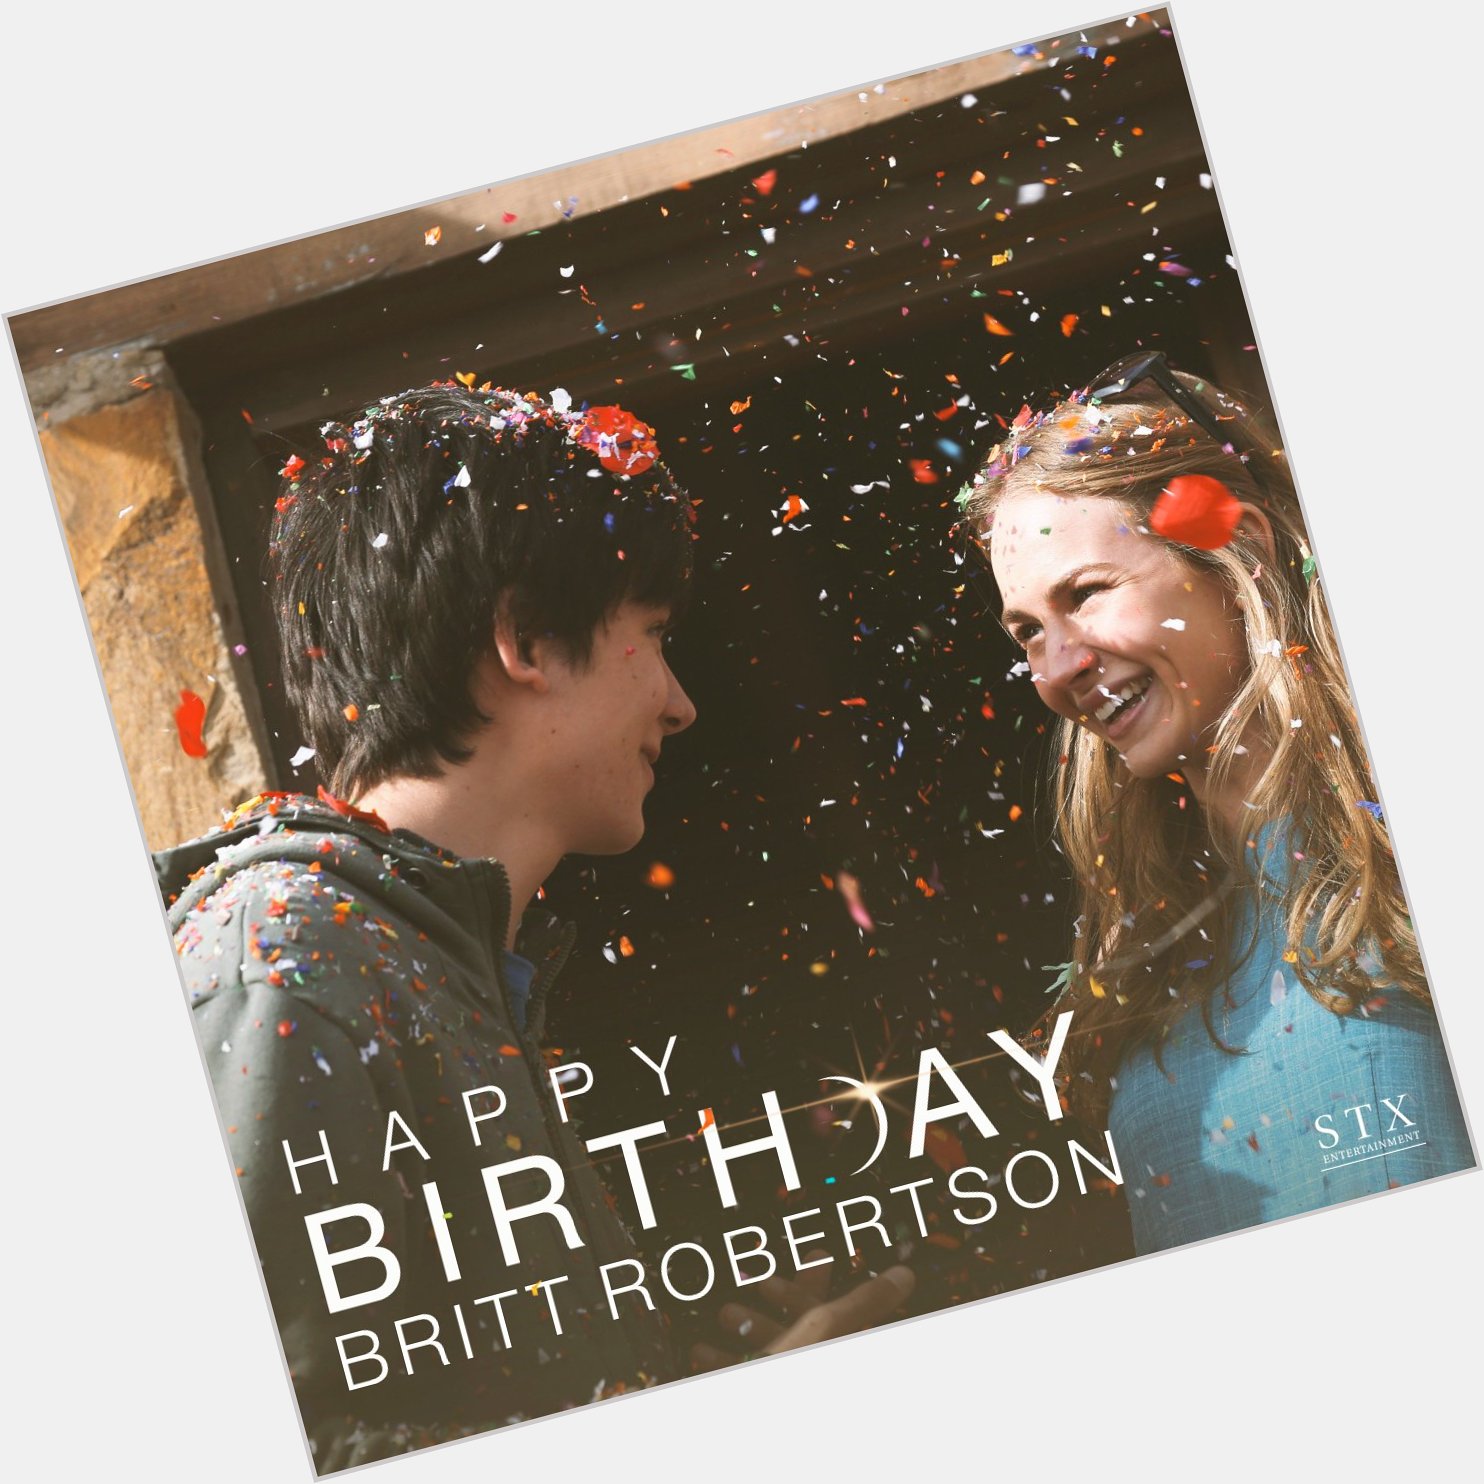 Happy birthday to the lovely Britt Robertson! 